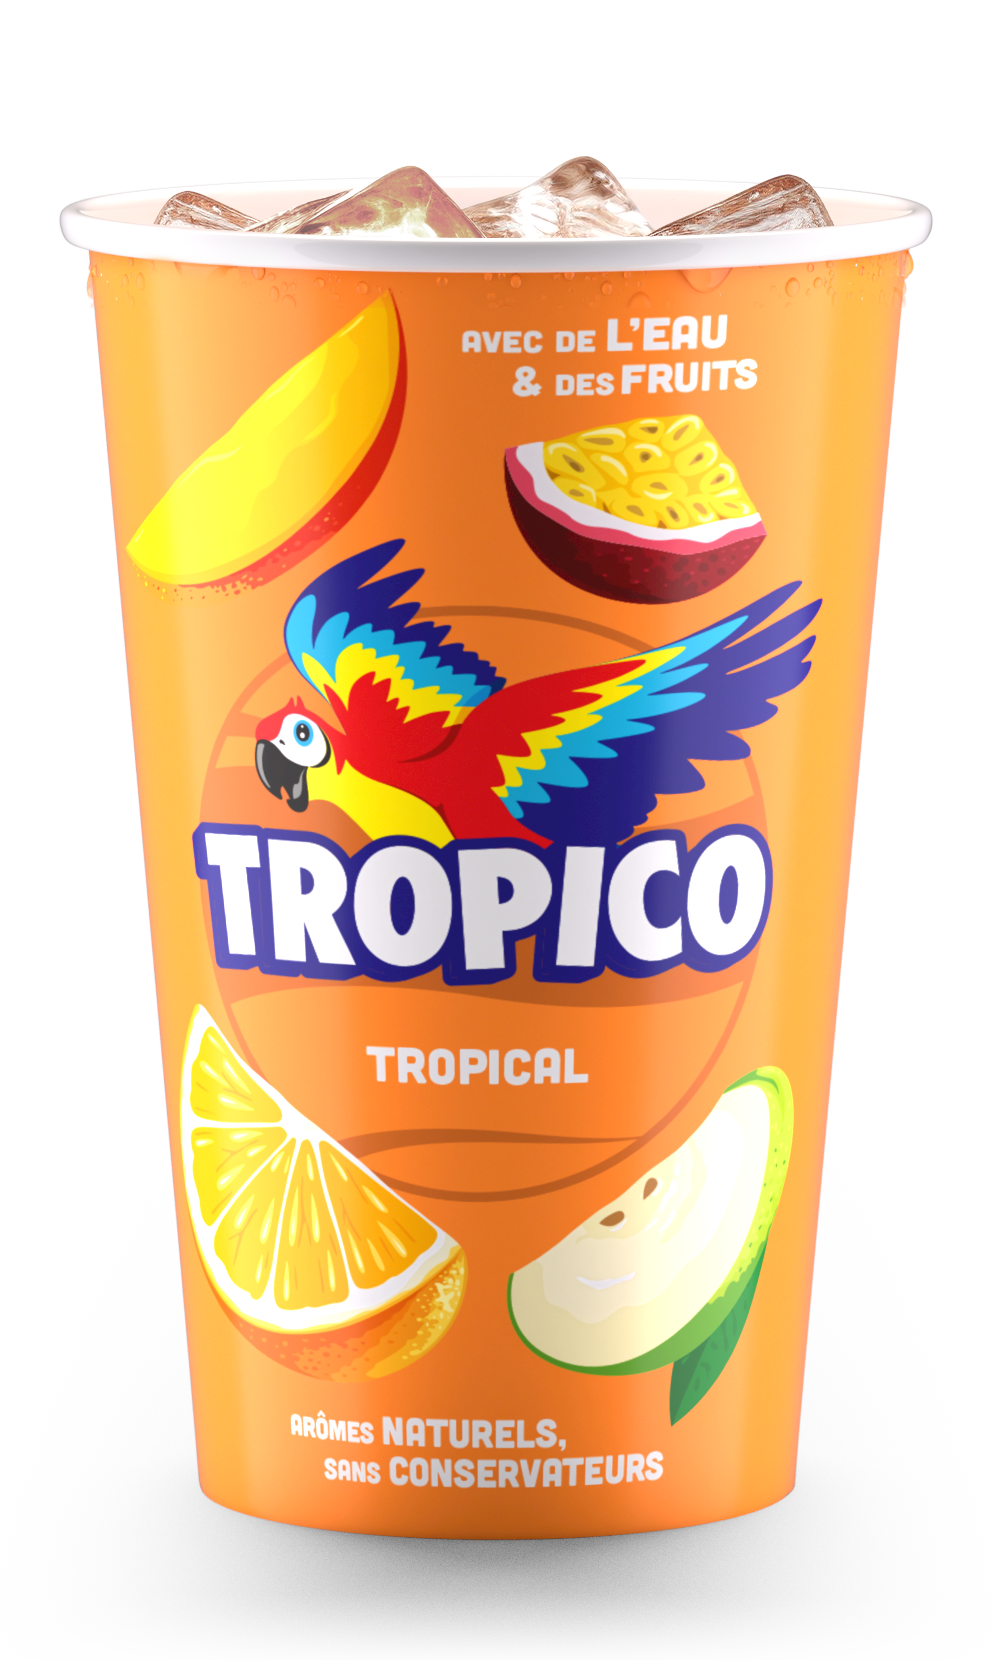 Cup de Tropico Tropical saveur Tropical